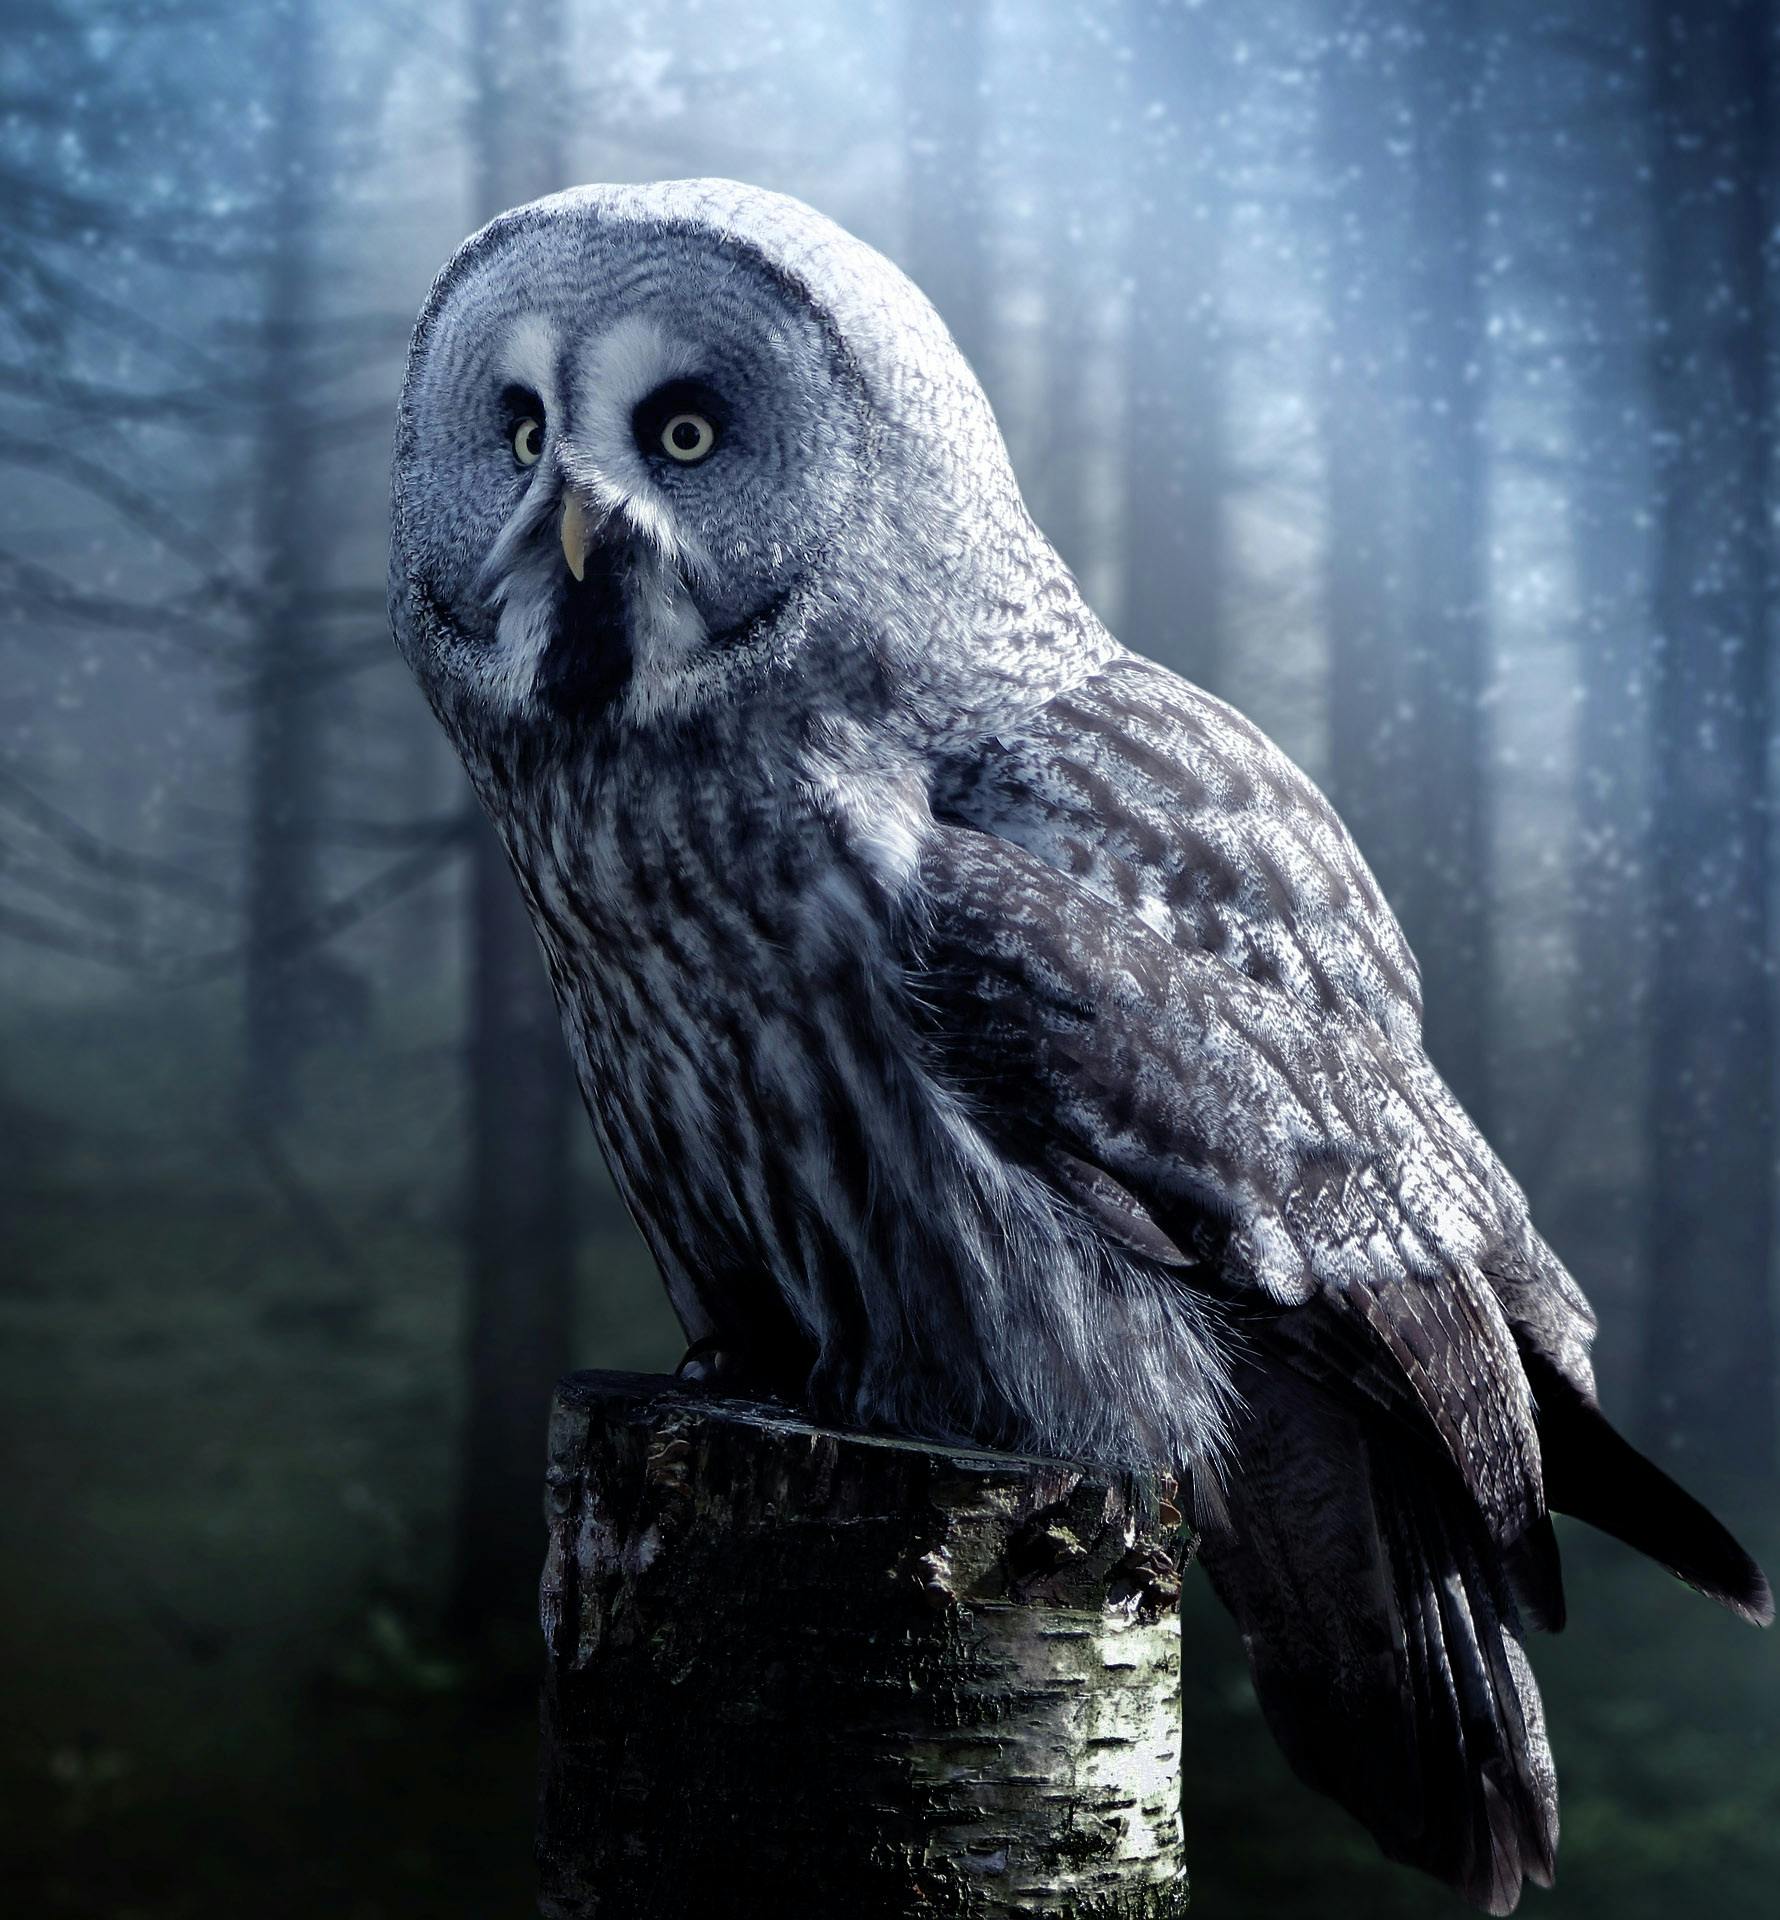 a large owl sitting on top of a tree stump, a portrait, pexels contest winner, photorealism, moonlight grey, 4k', grey mist, instagram post